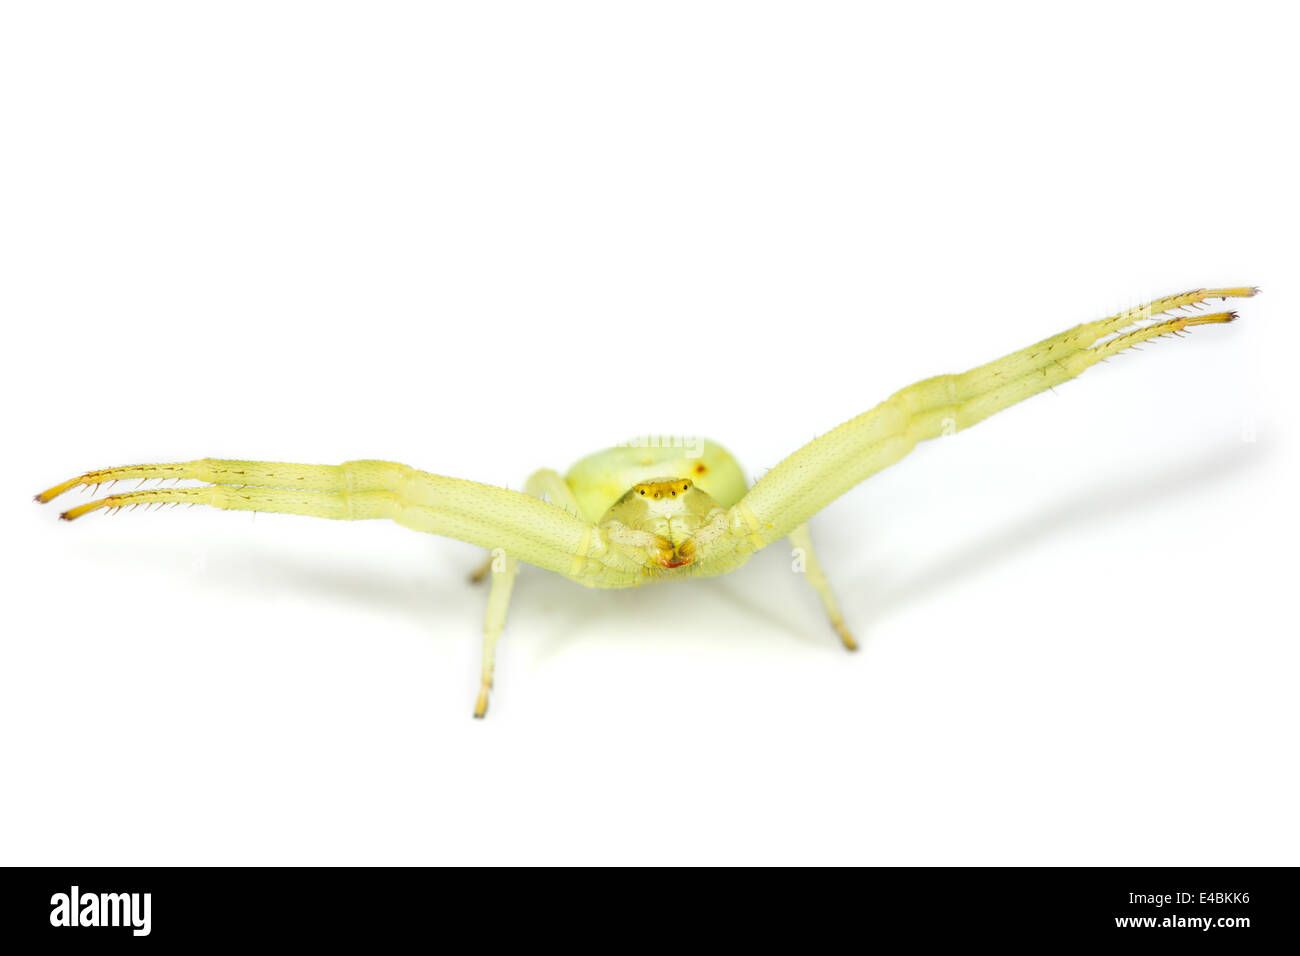 Weibliche Goldrute Krabbenspinne (Misumena Vatia), Teil der Familie Thomisidae - Krabben Spinnen. Stockfoto